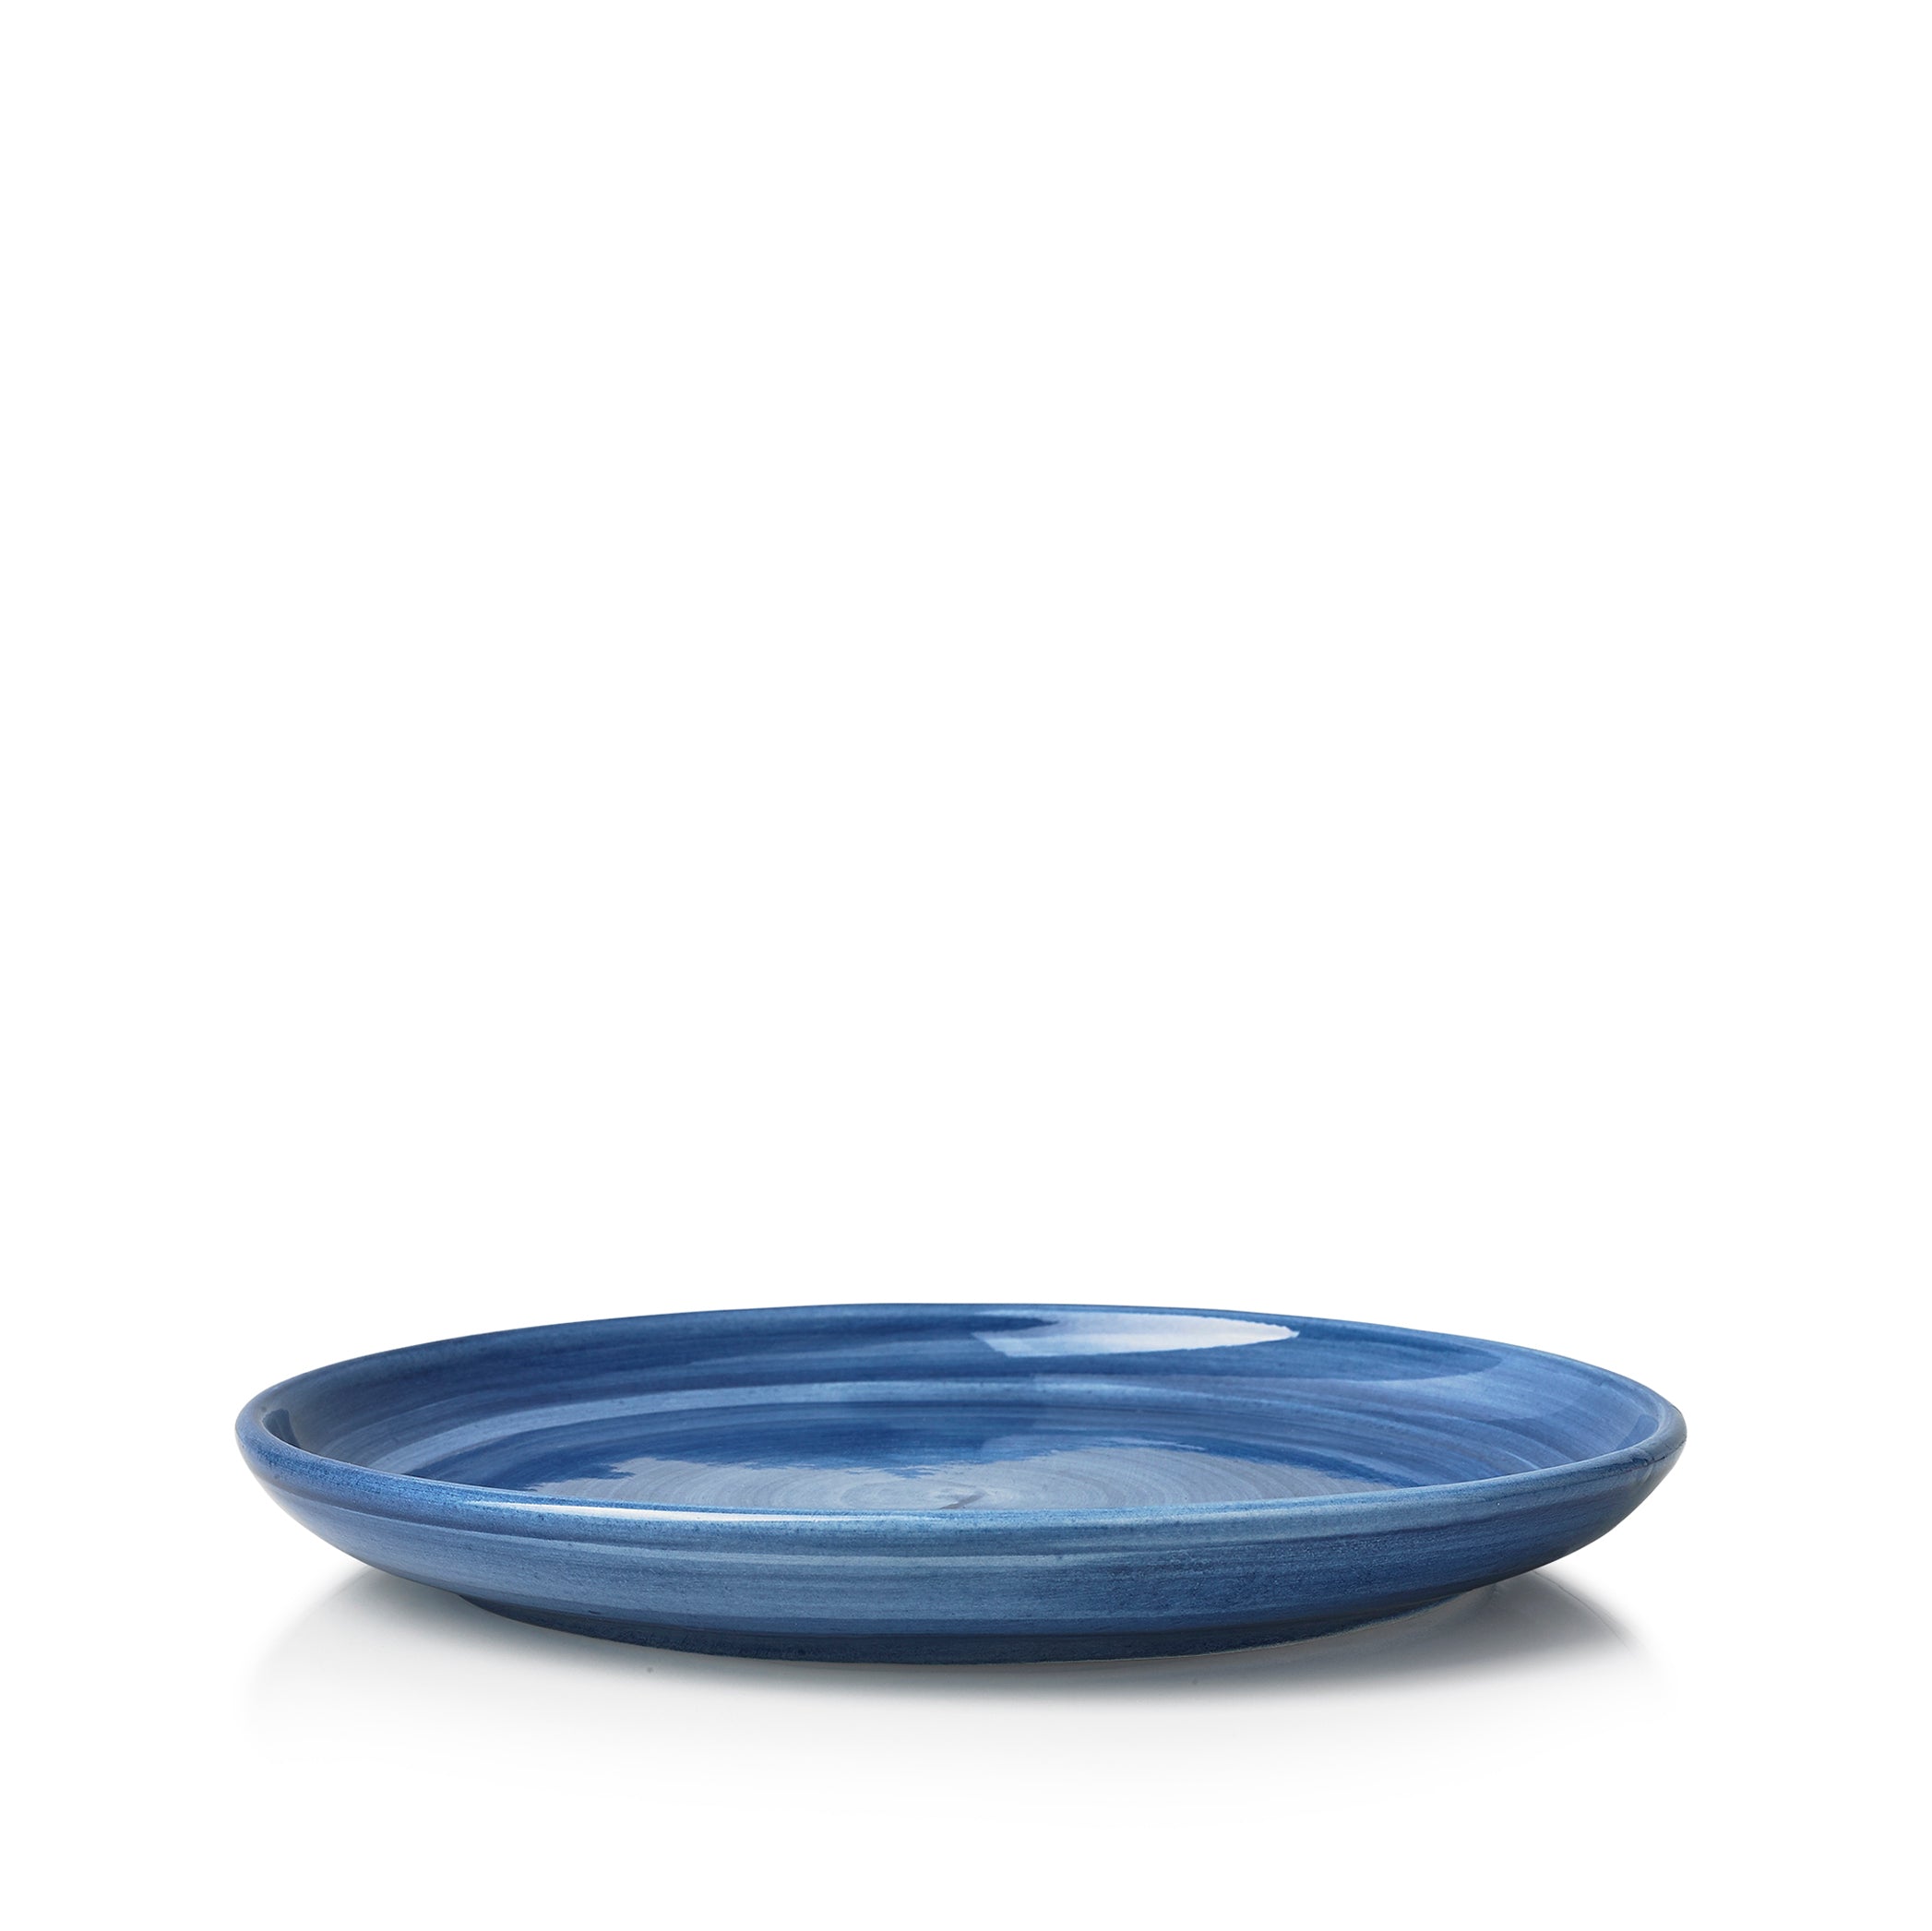 S&B "La Couronne" 20cm Ceramic Side Plate in Blue